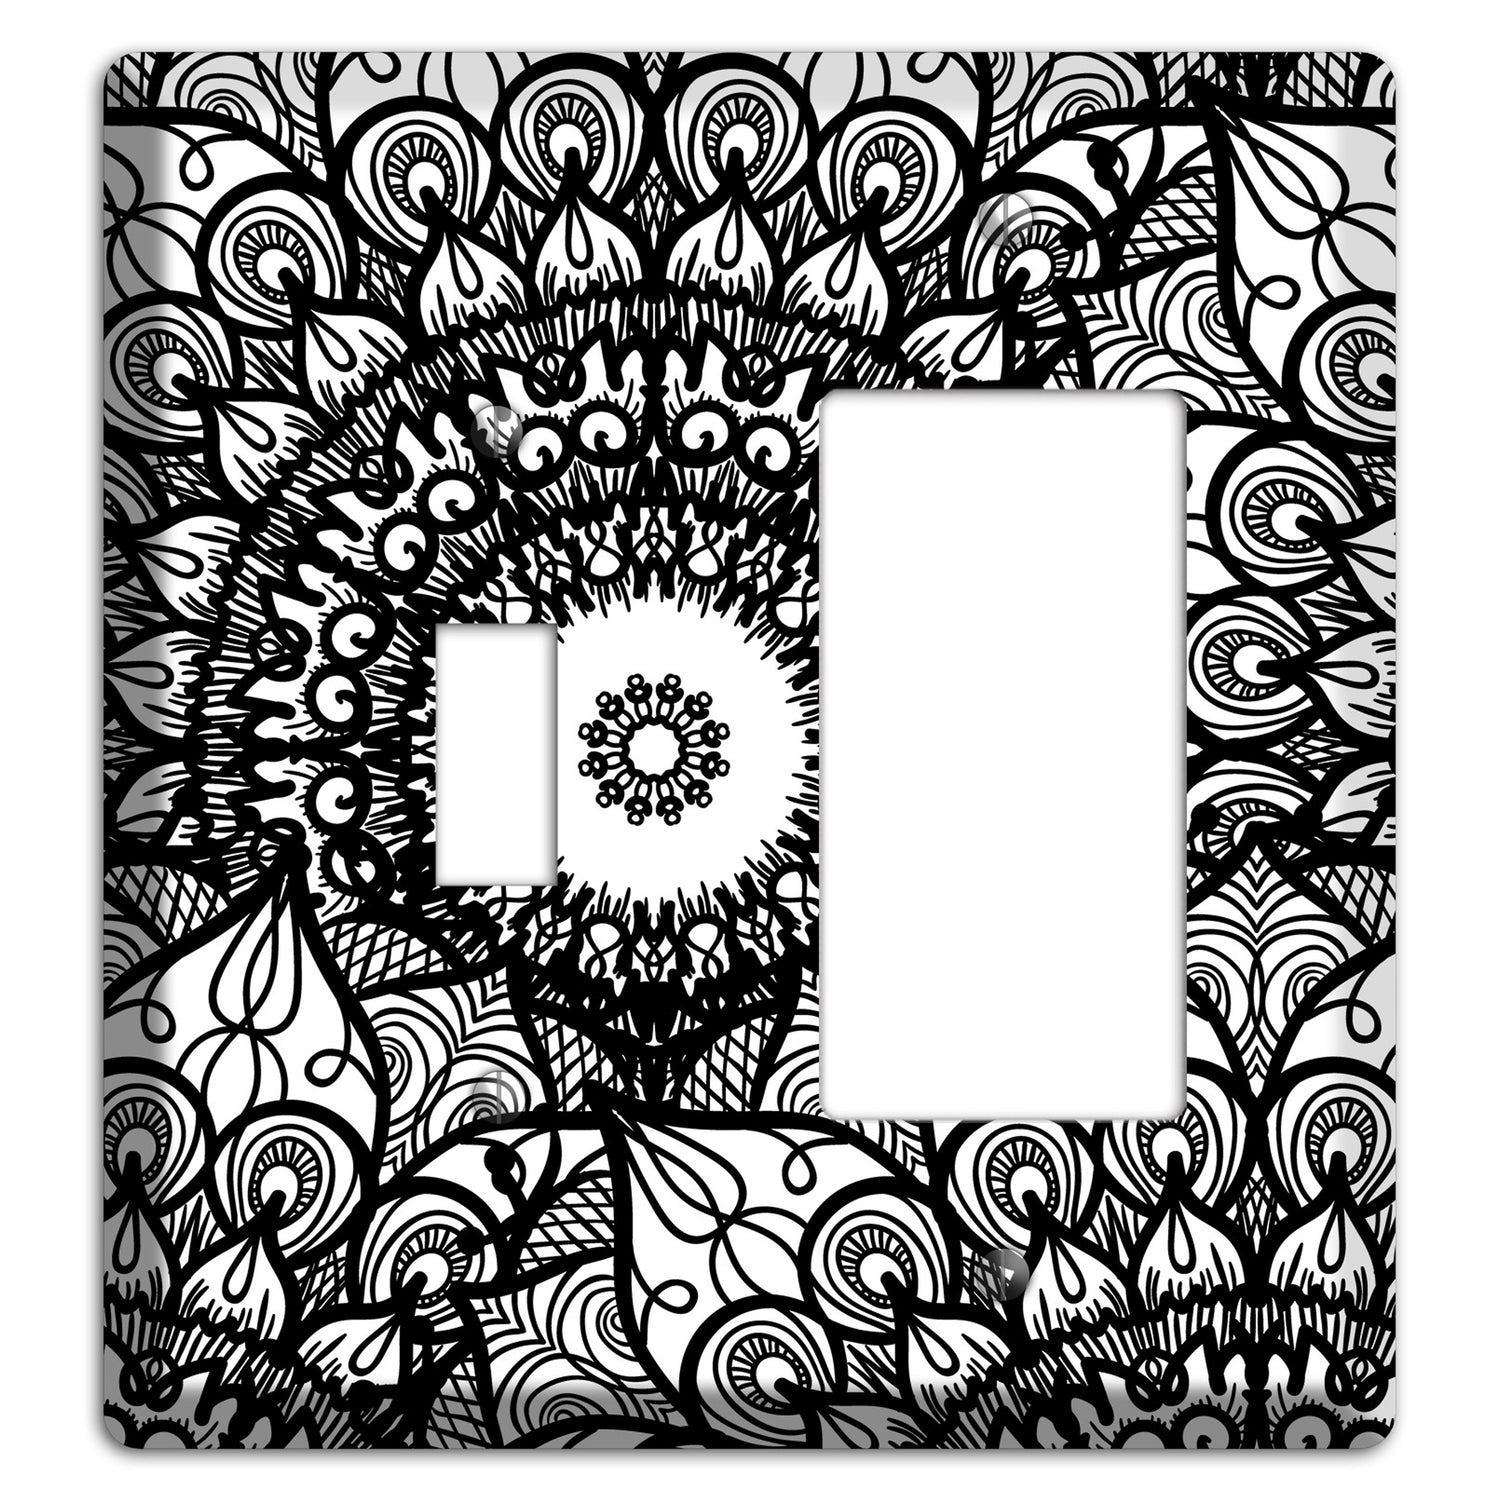 Mandala Black and White Style V Cover Plates Toggle / Rocker Wallplate